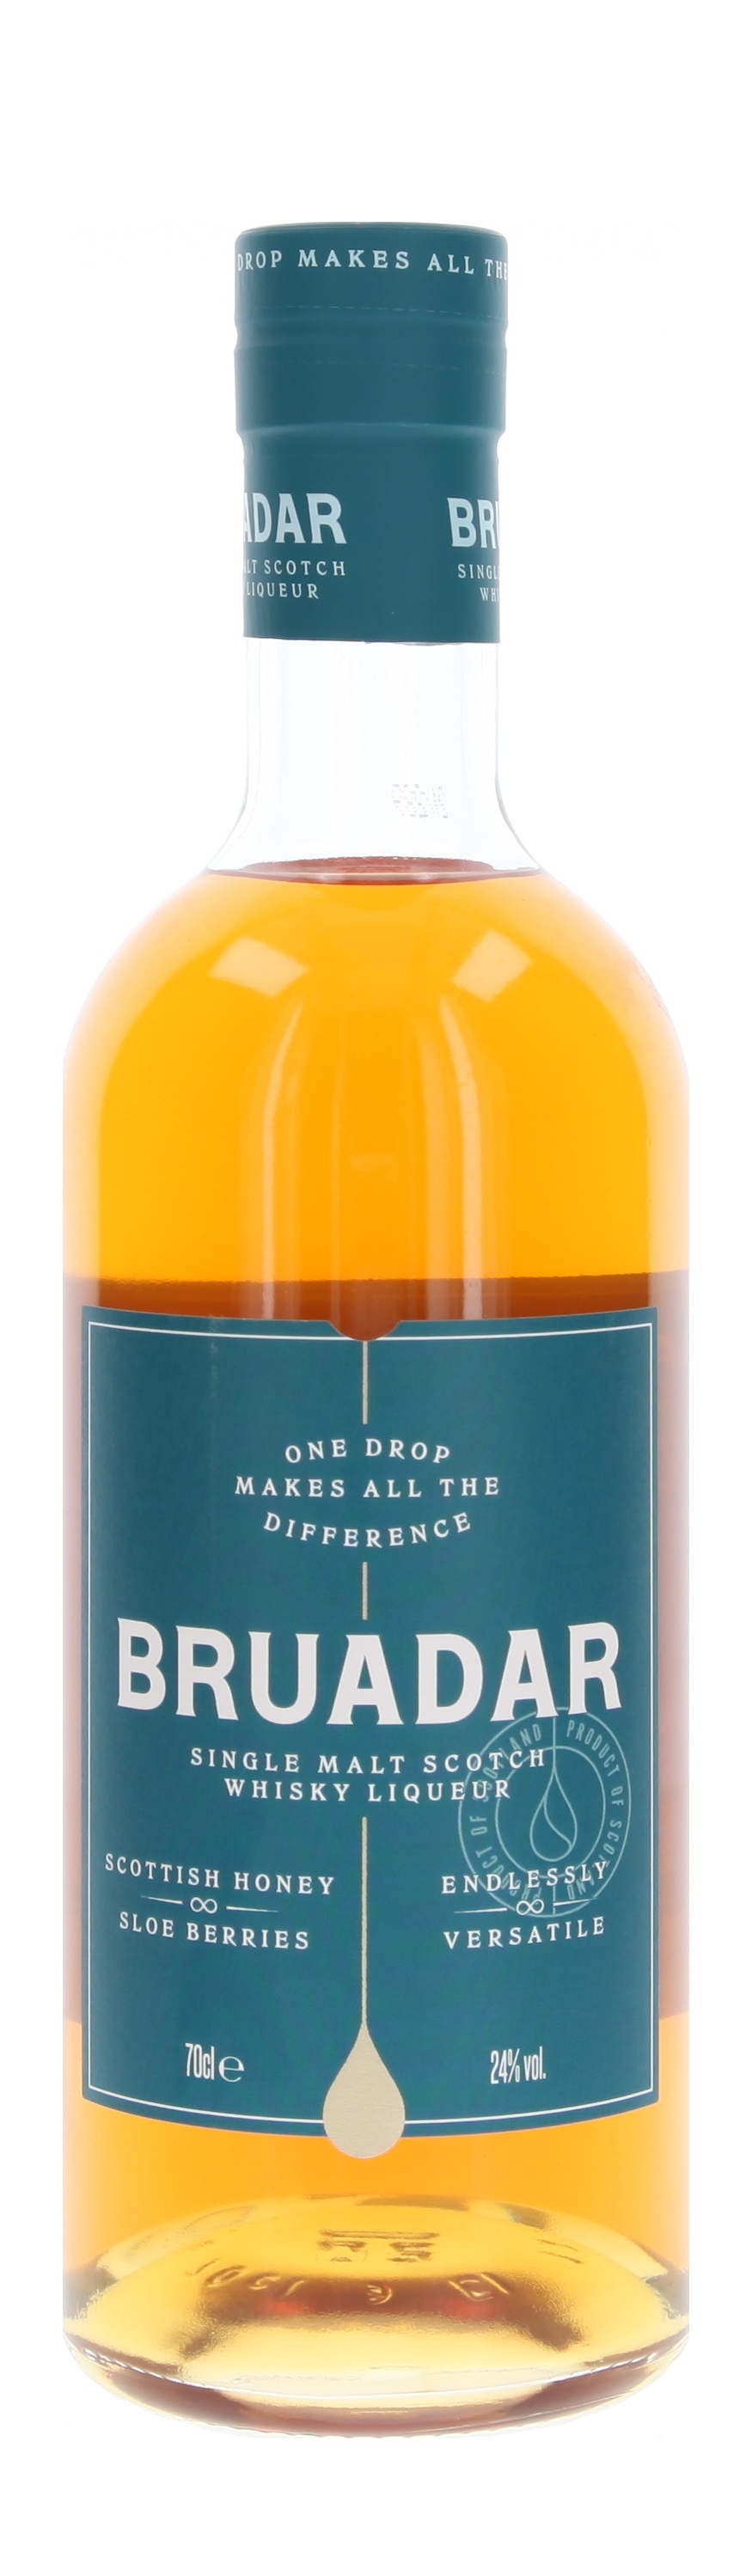 Bruadar | Whisky.de Austria » To store the online